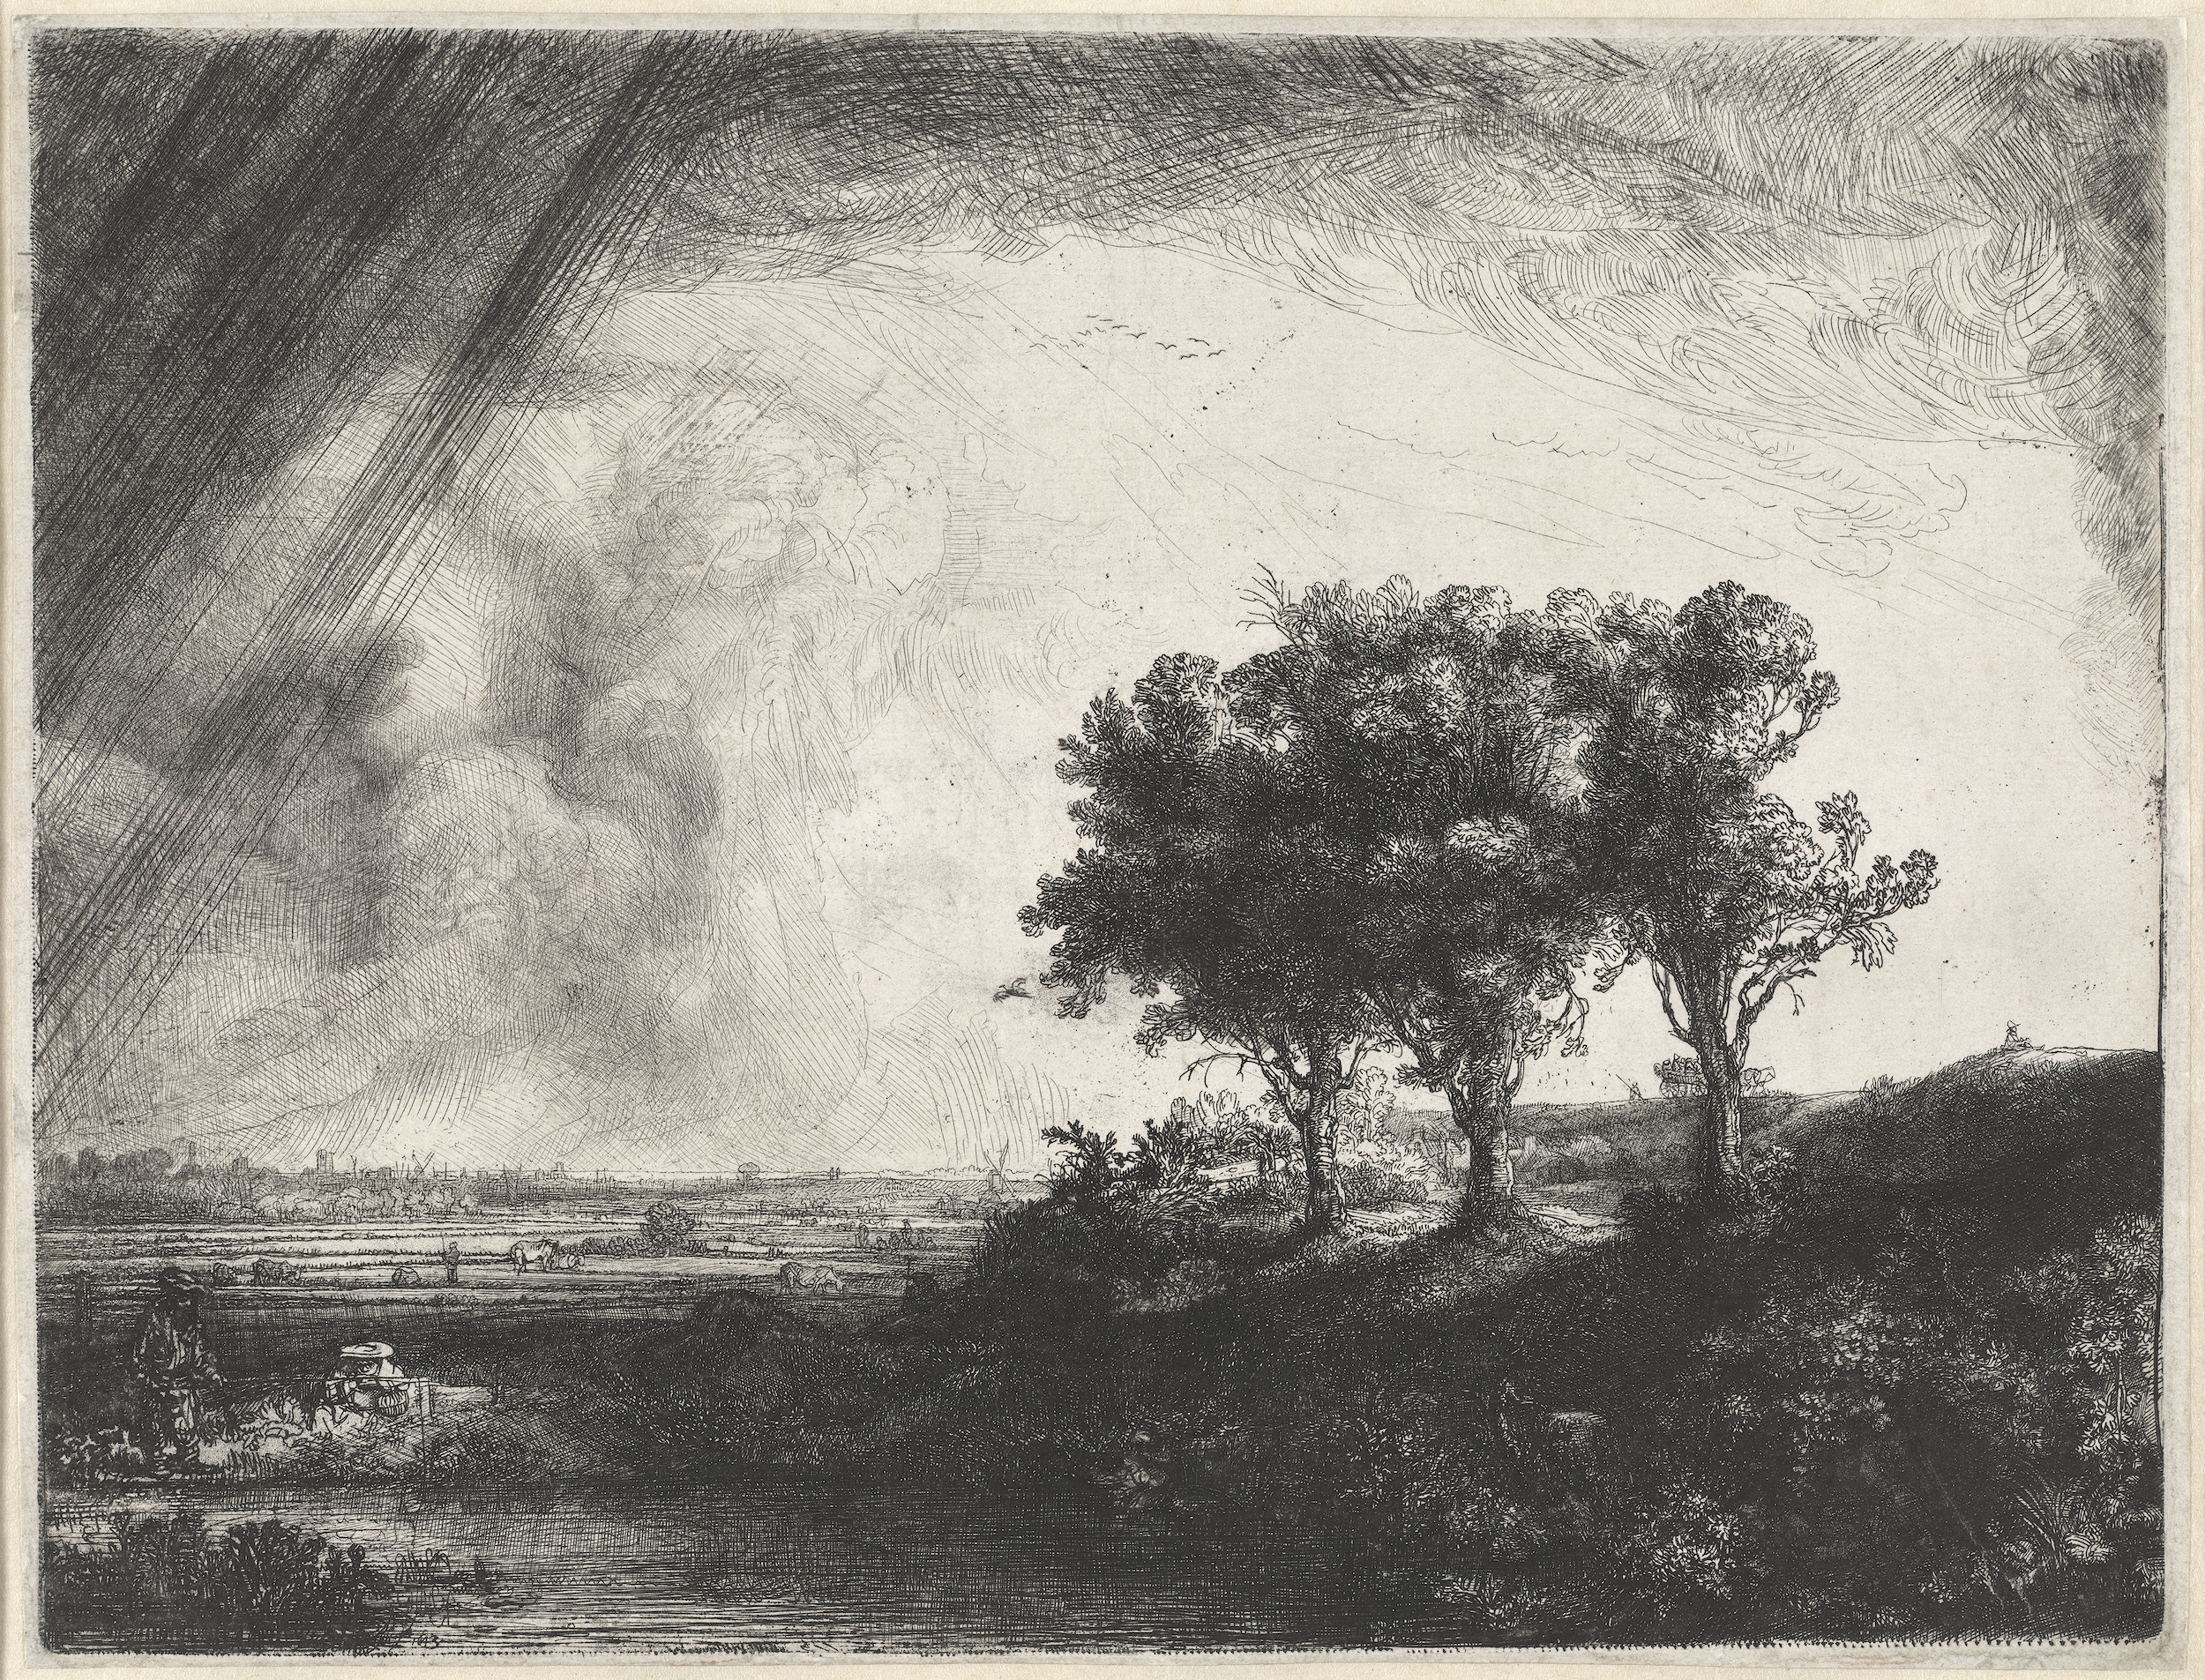 三棵樹 by Rembrandt van Rijn - 1643 - 213 x 279 mm 